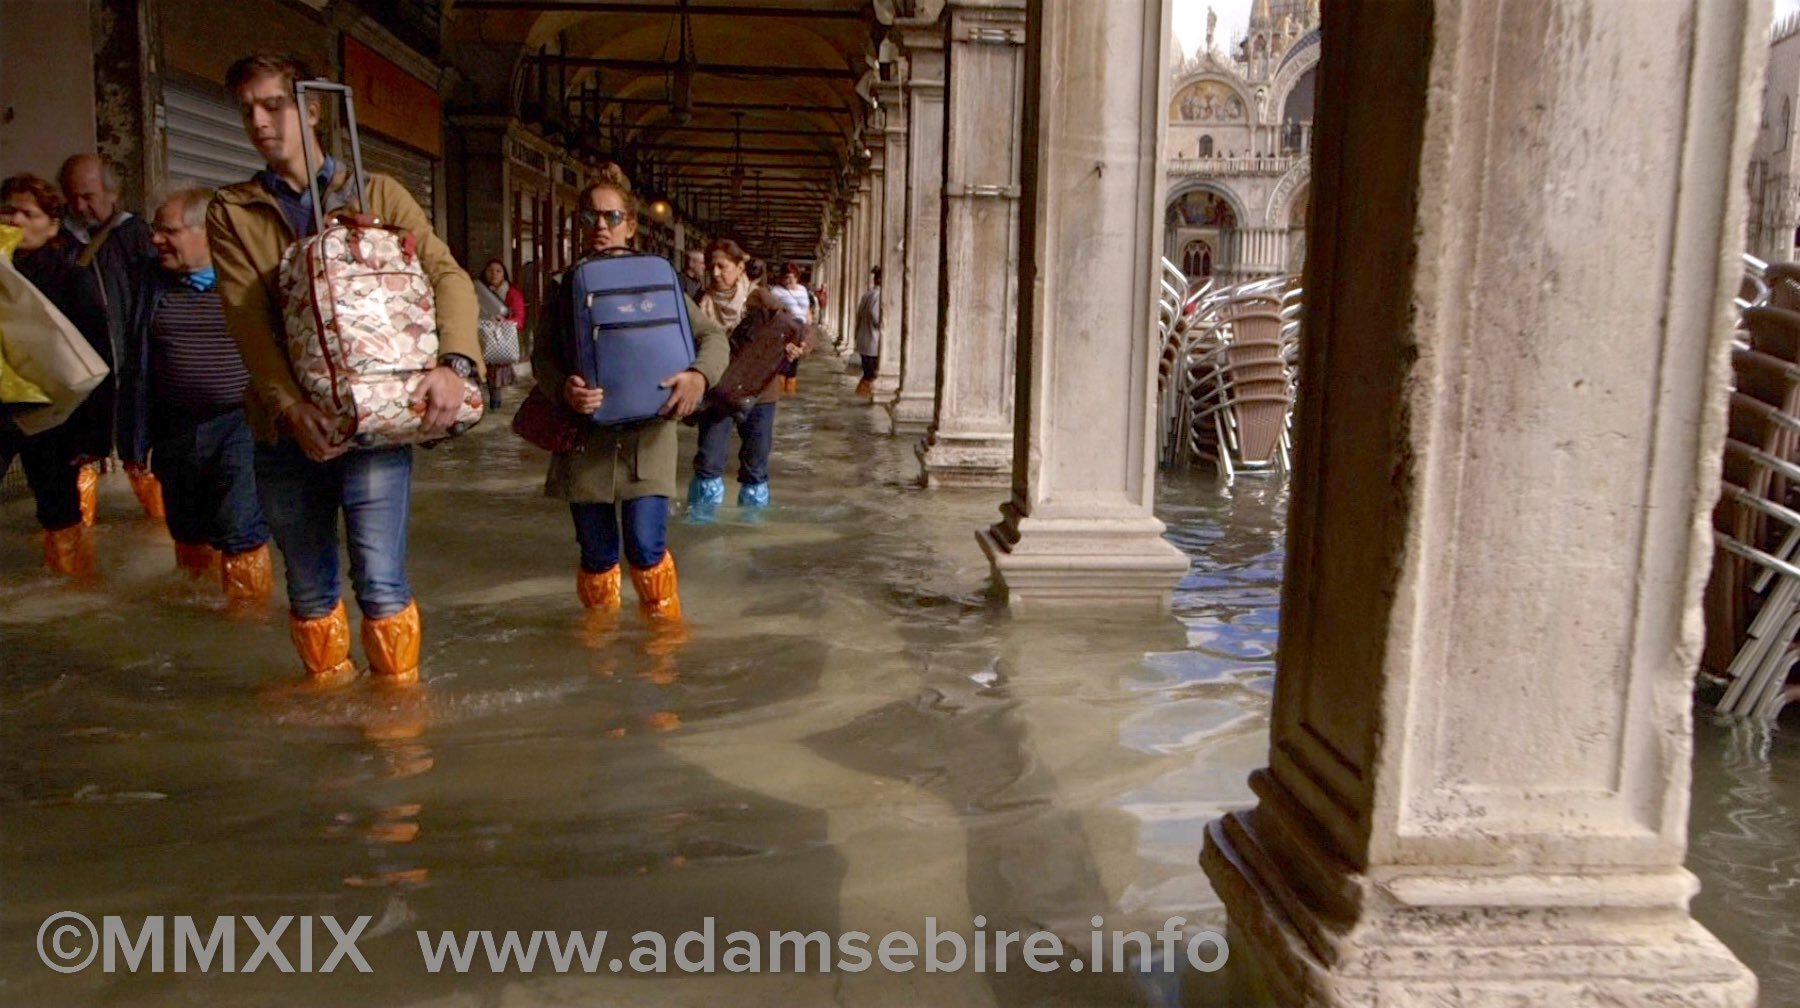 Venice acqua alta flooding - tourists with luggage.jpg